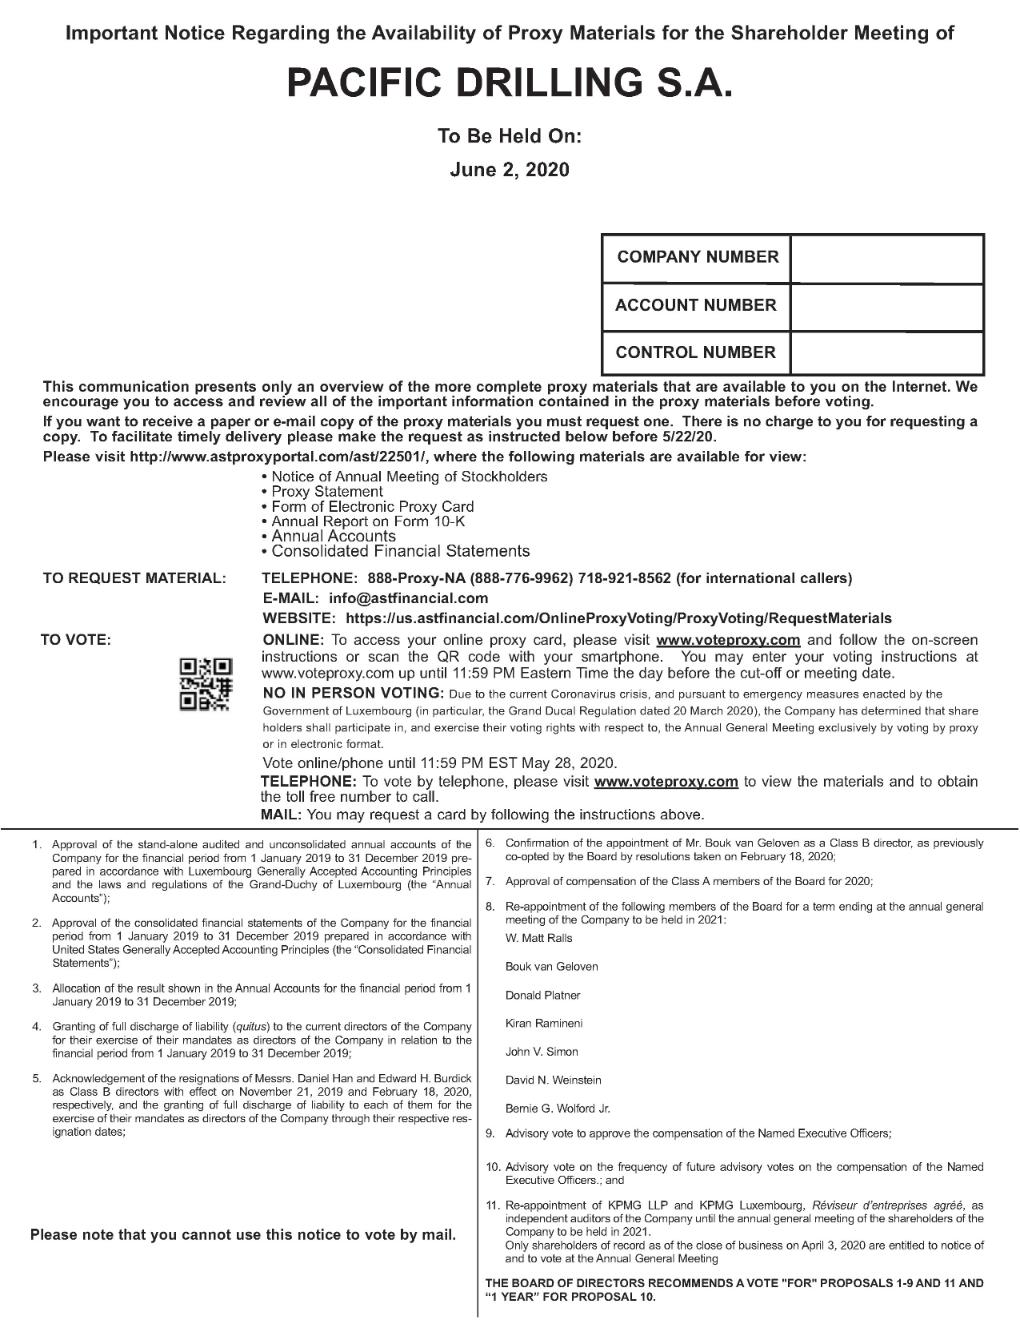 New Microsoft Word Document_pxn22501.gif